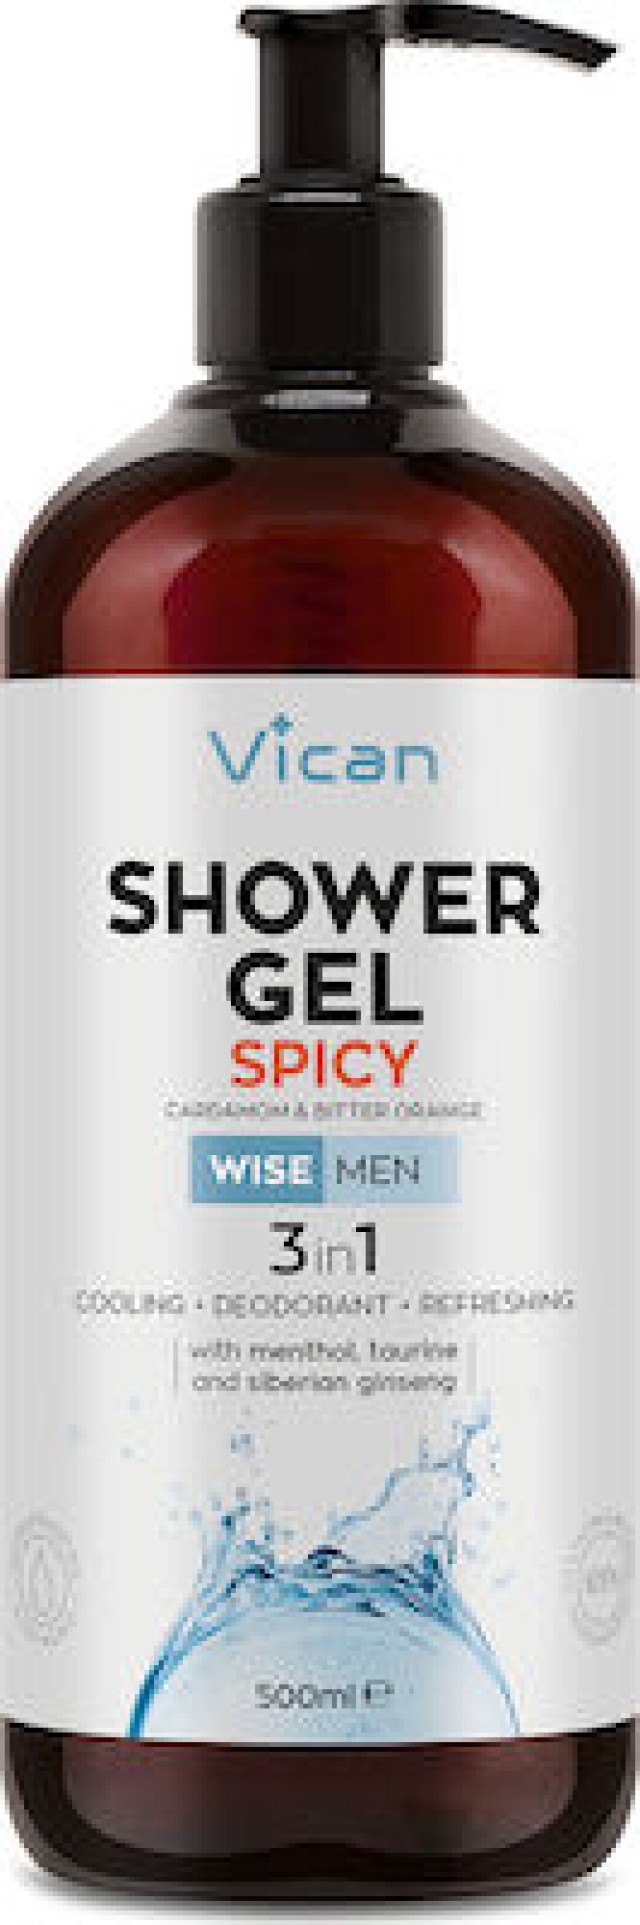 VICAN Wise Men Shower Gel Spicy Ανδρικό Αφρόλουτρο με Αίσθηση Φρεσκάδας - Απαλό Άρωμα Κάρδαμου & Bitter Orange, 500ml